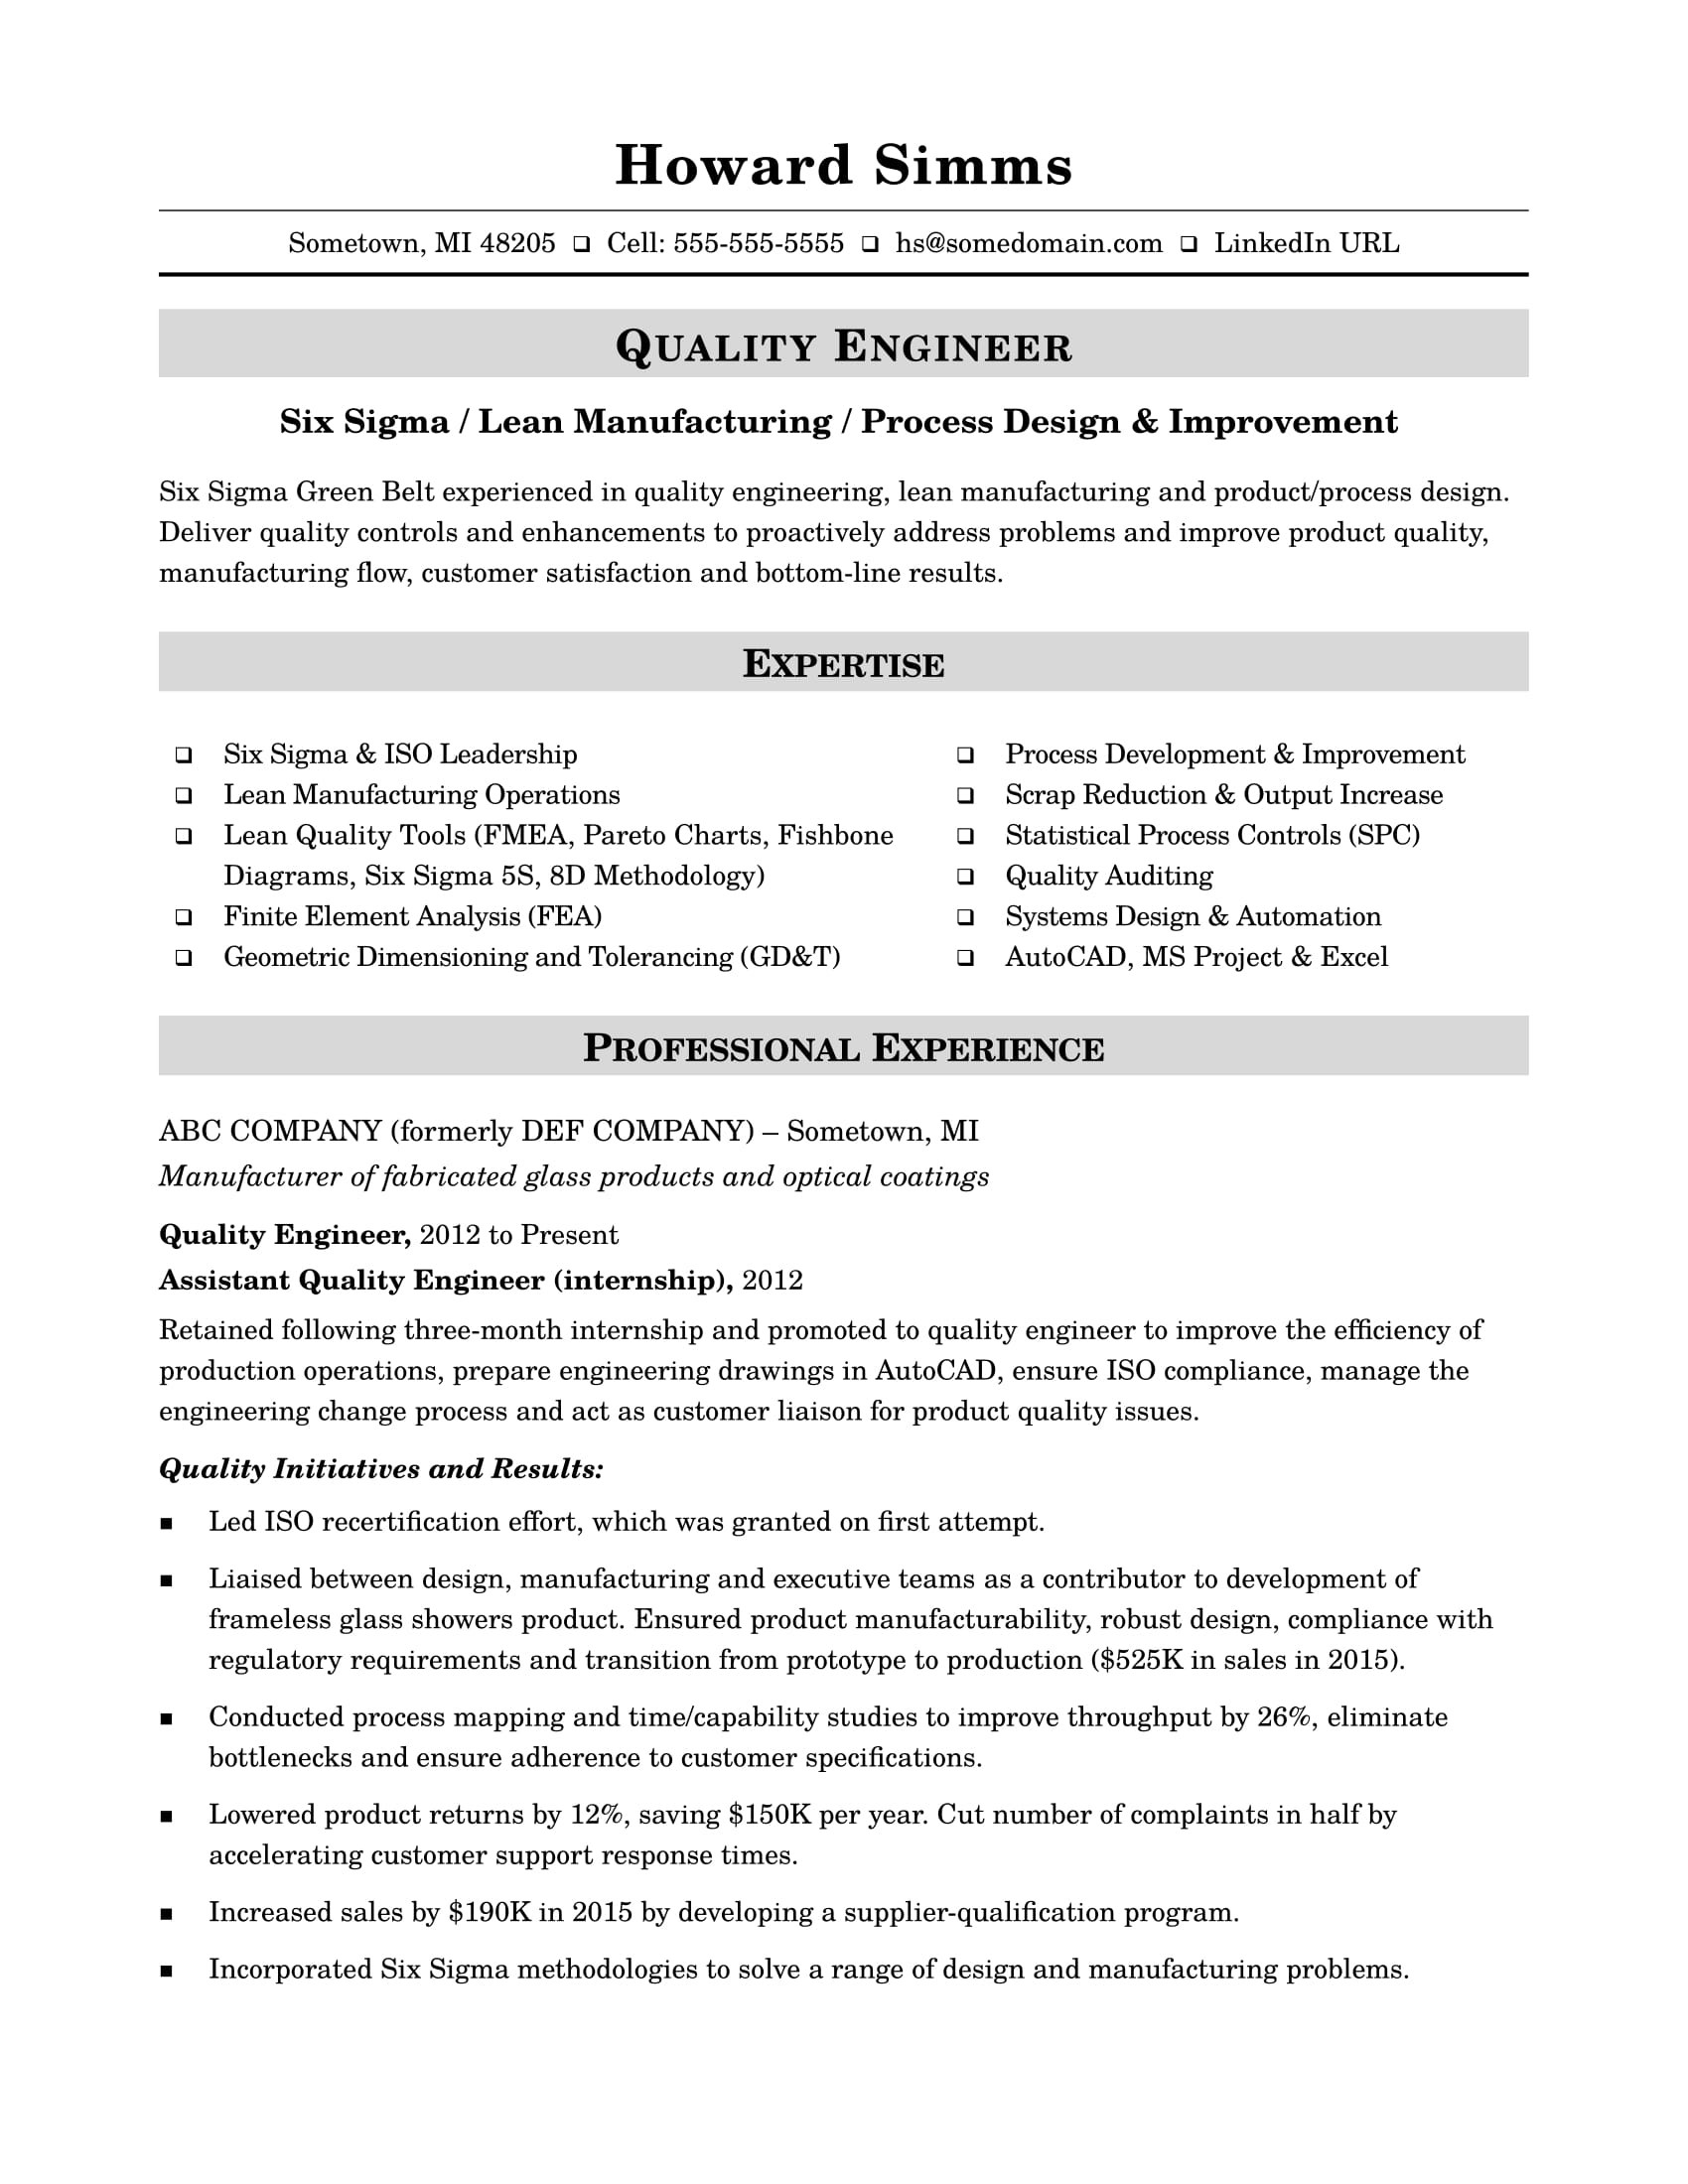 Sample Resume for Product Development Engineer Sample Resume for A Midlevel Quality Engineer Monster.com